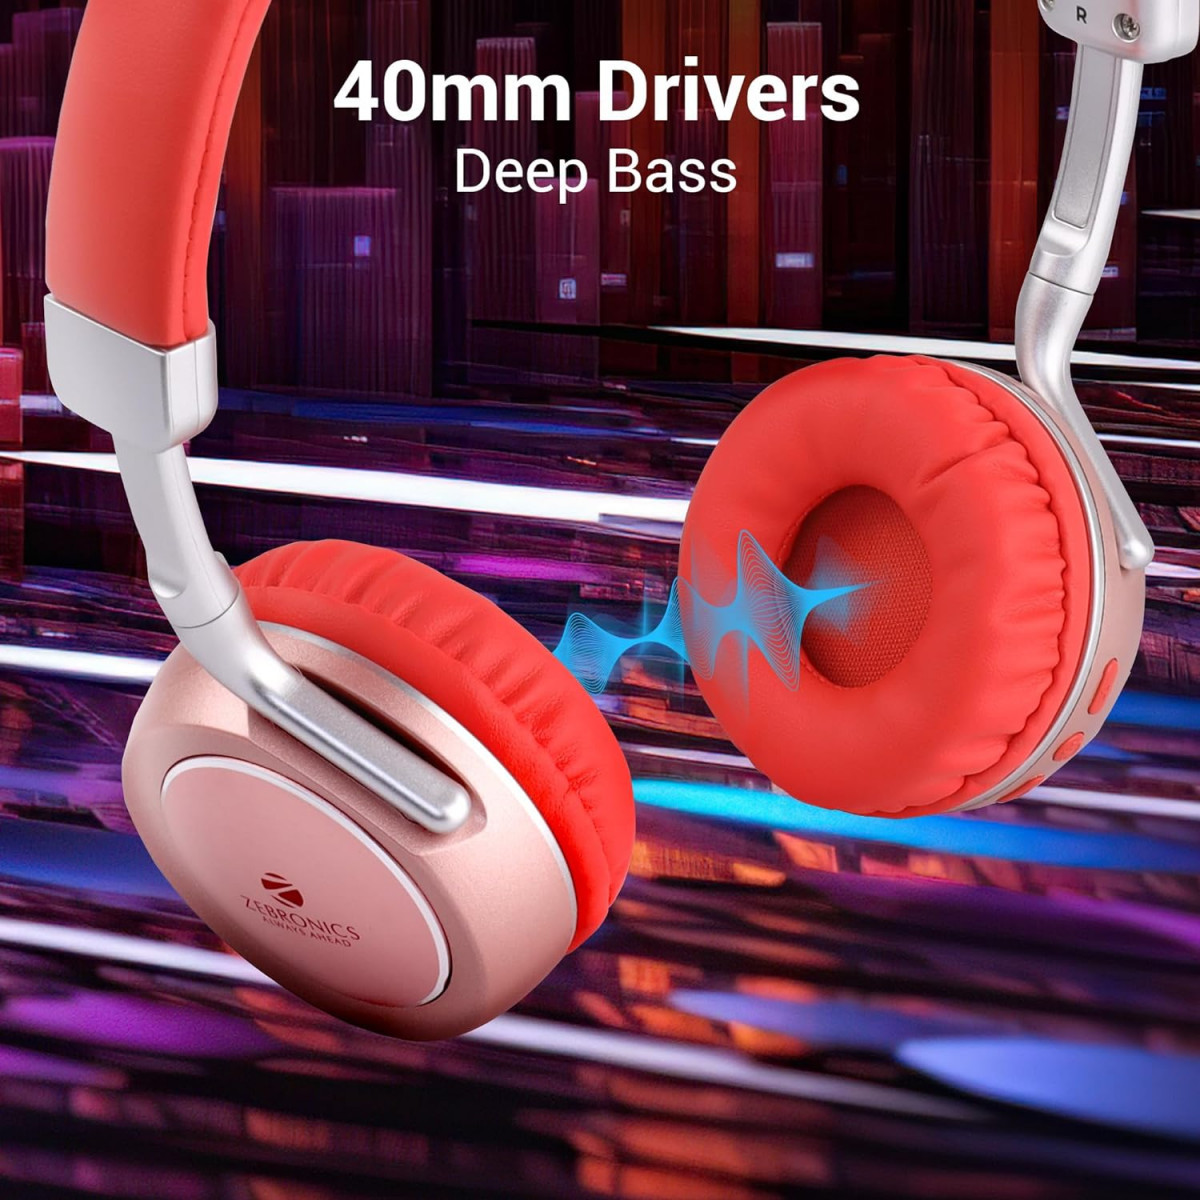 ZEBRONICS Zeb-Duke 2 Wireless Headphone Red